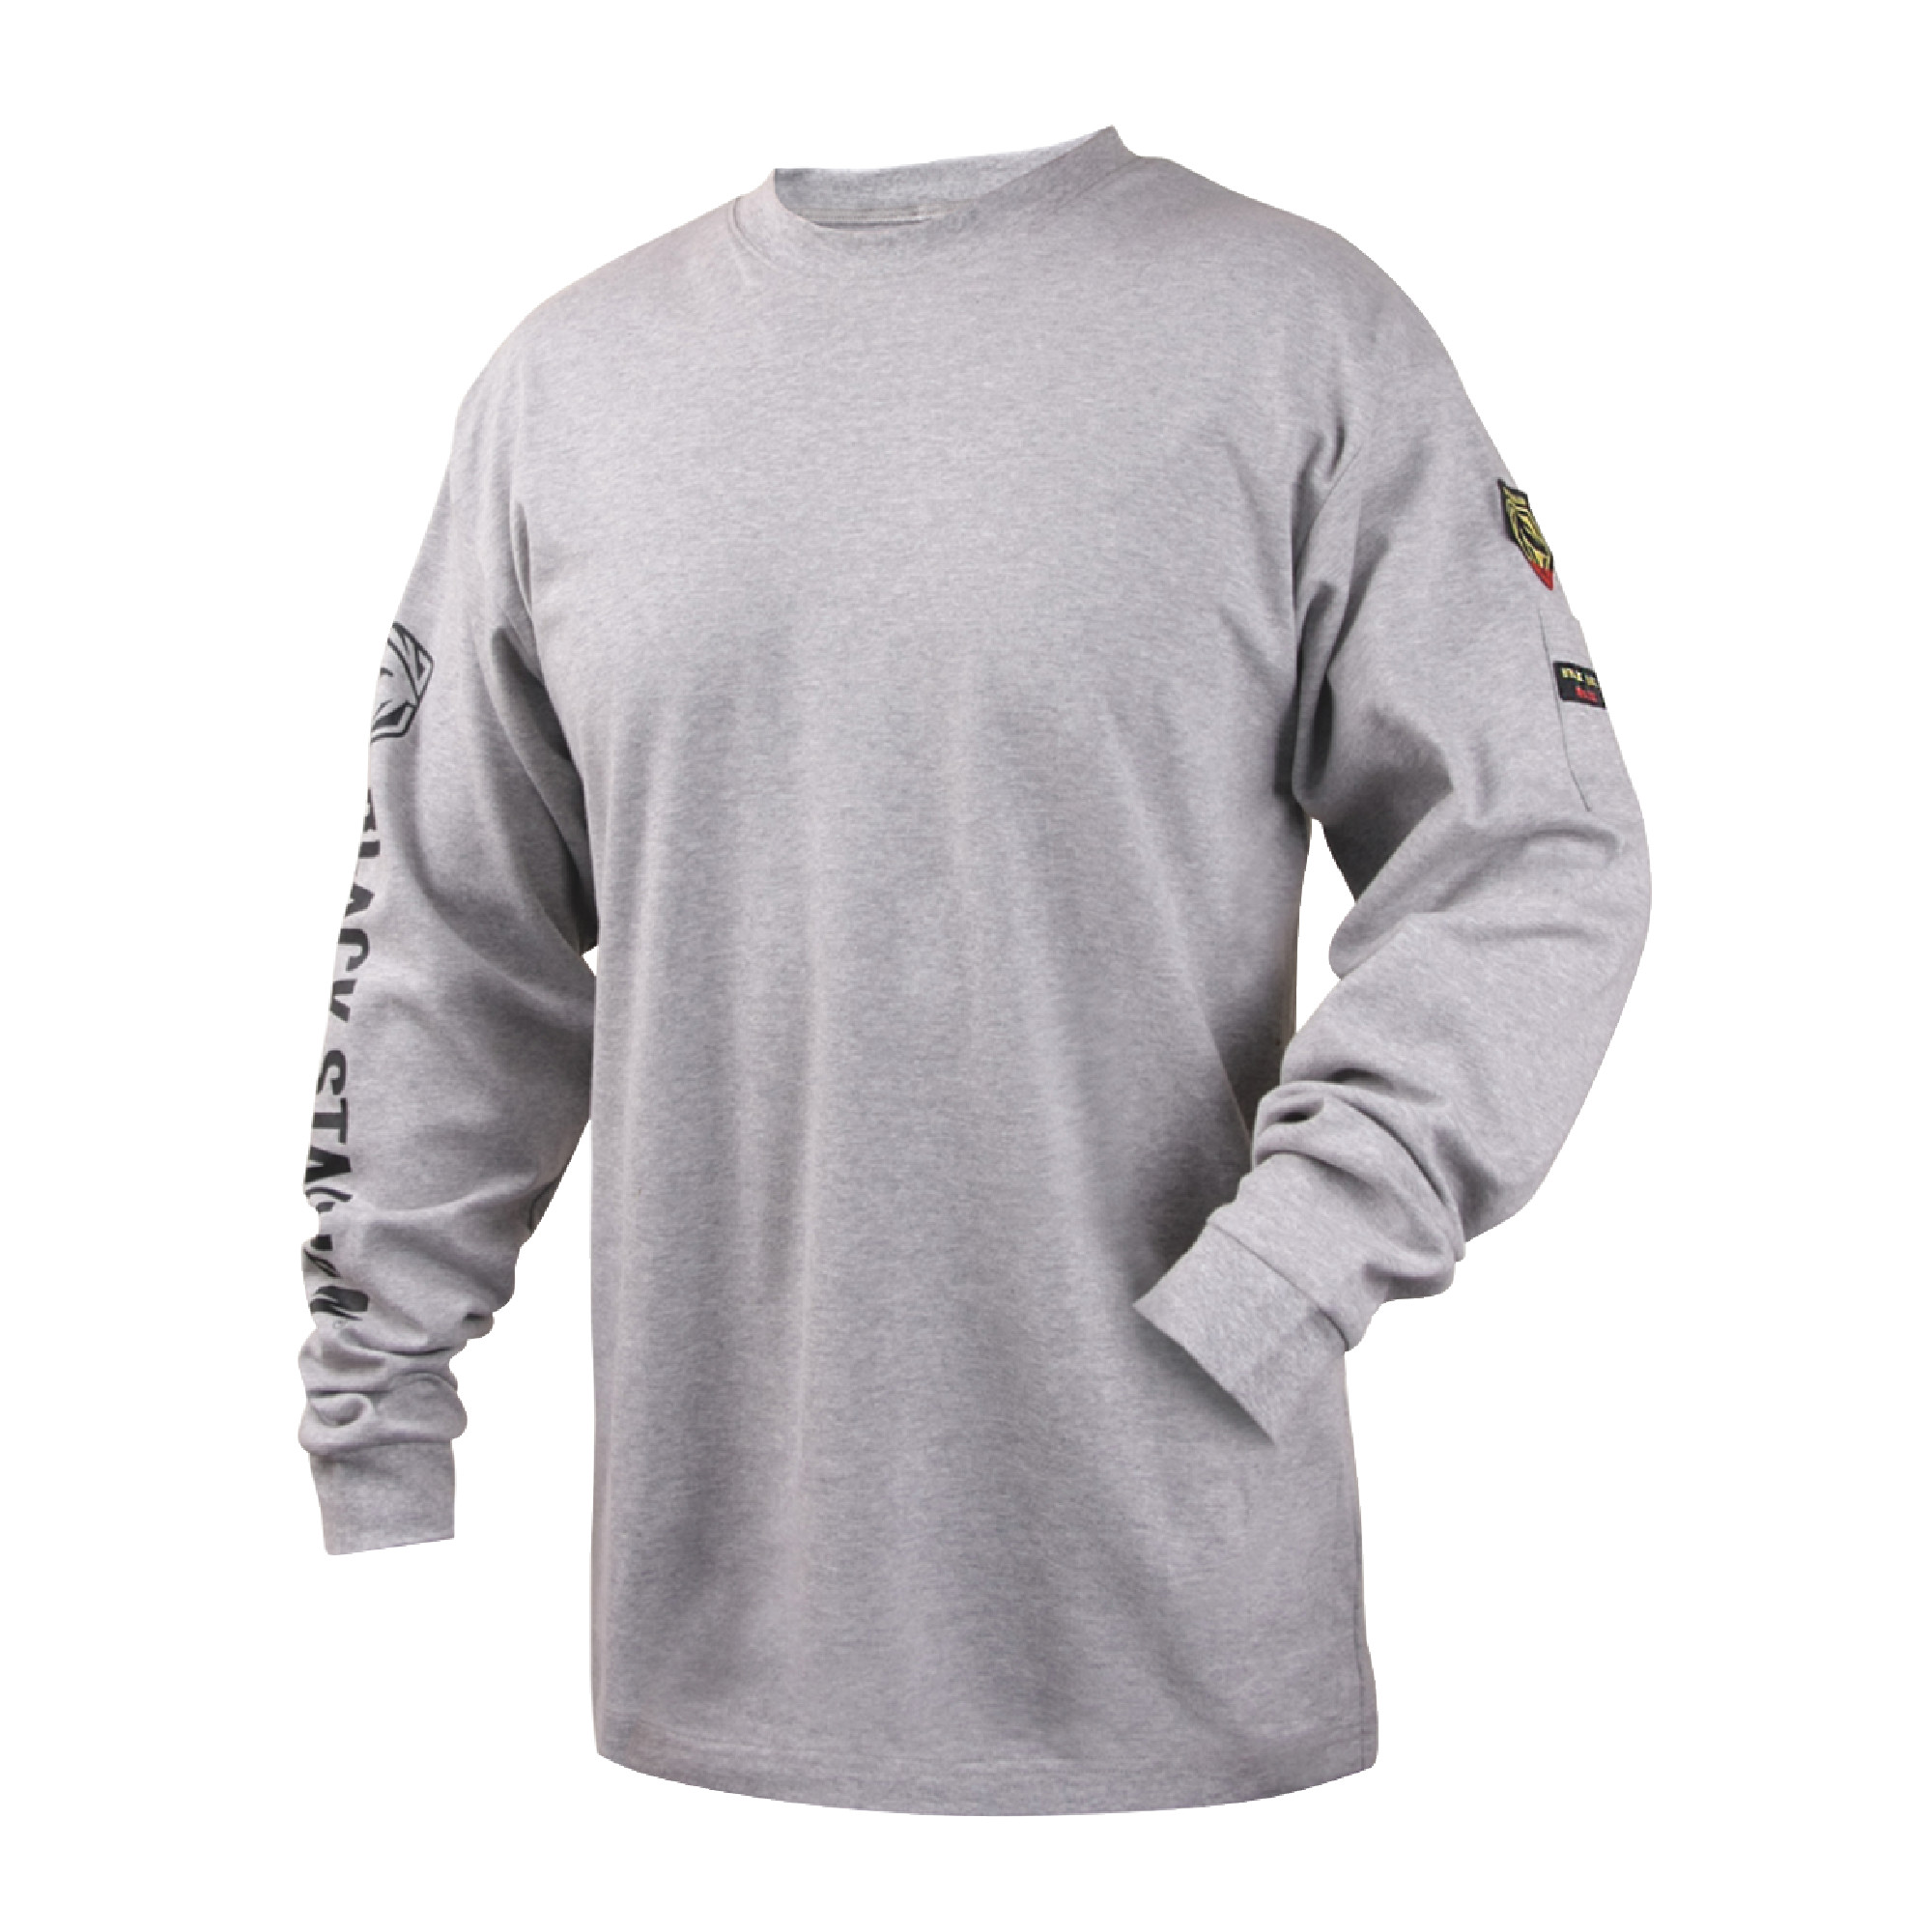 Black Stallion Gray Long Sleeve Flame Resistant Welding T-Shirt - Size M